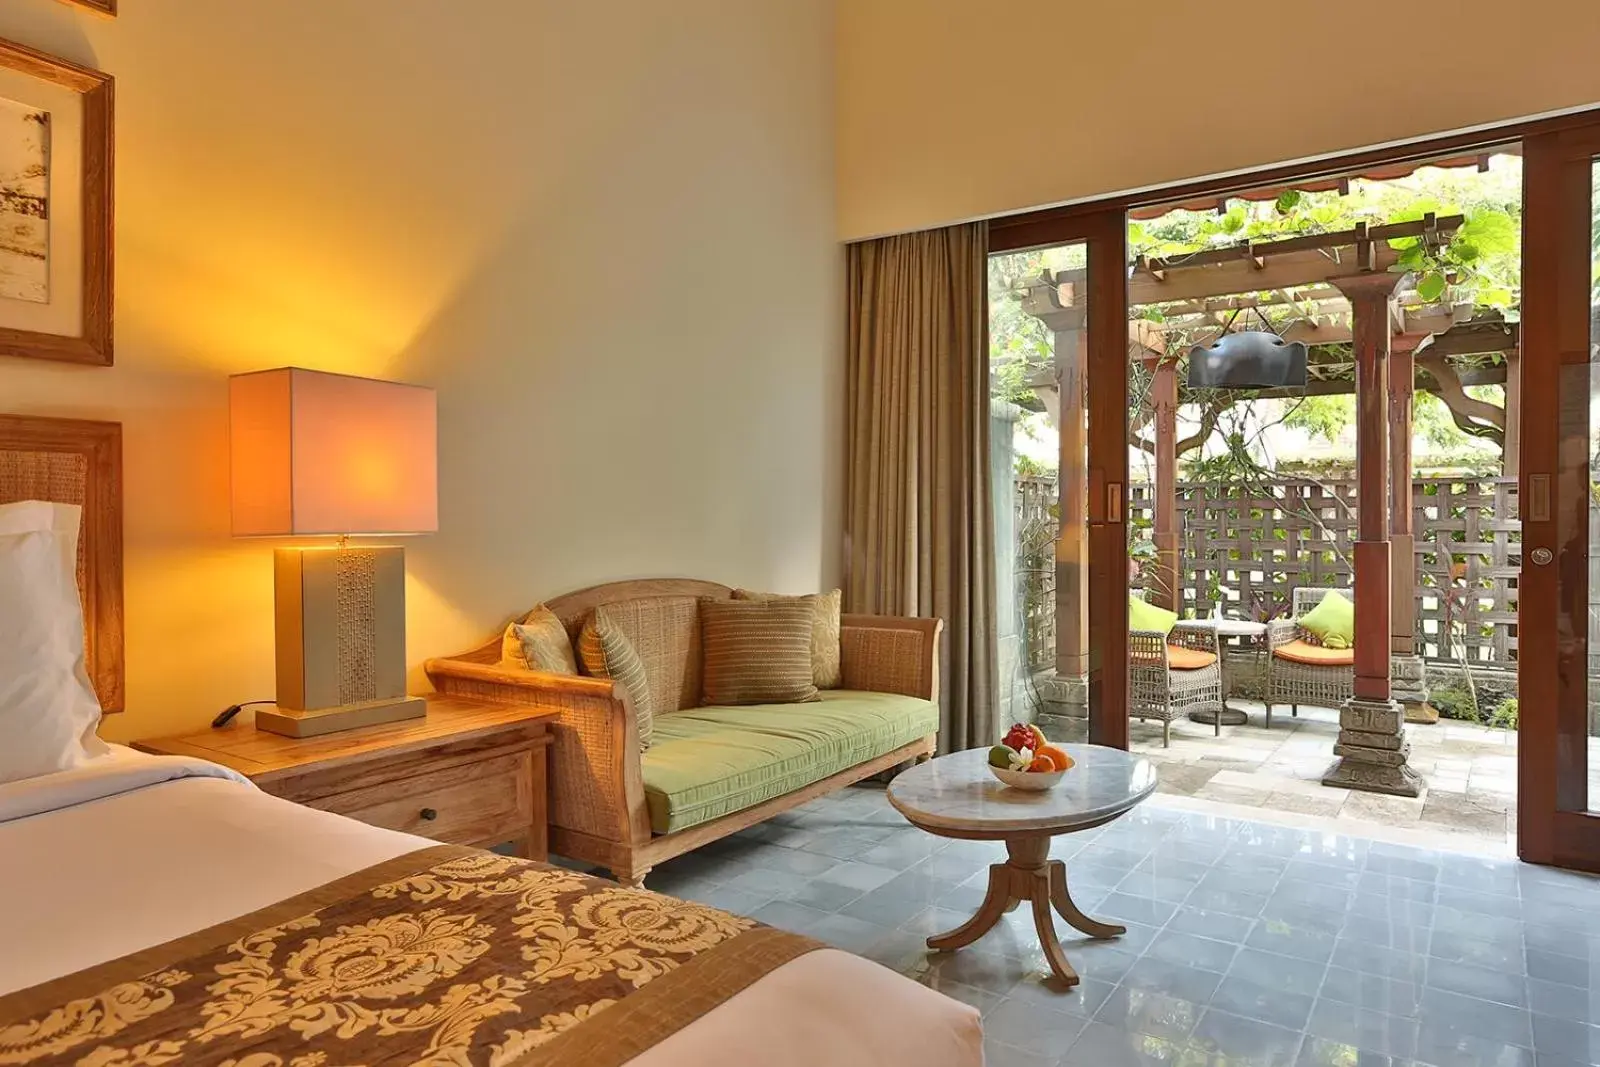 Bedroom, Seating Area in Sudamala Resort, Sanur, Bali